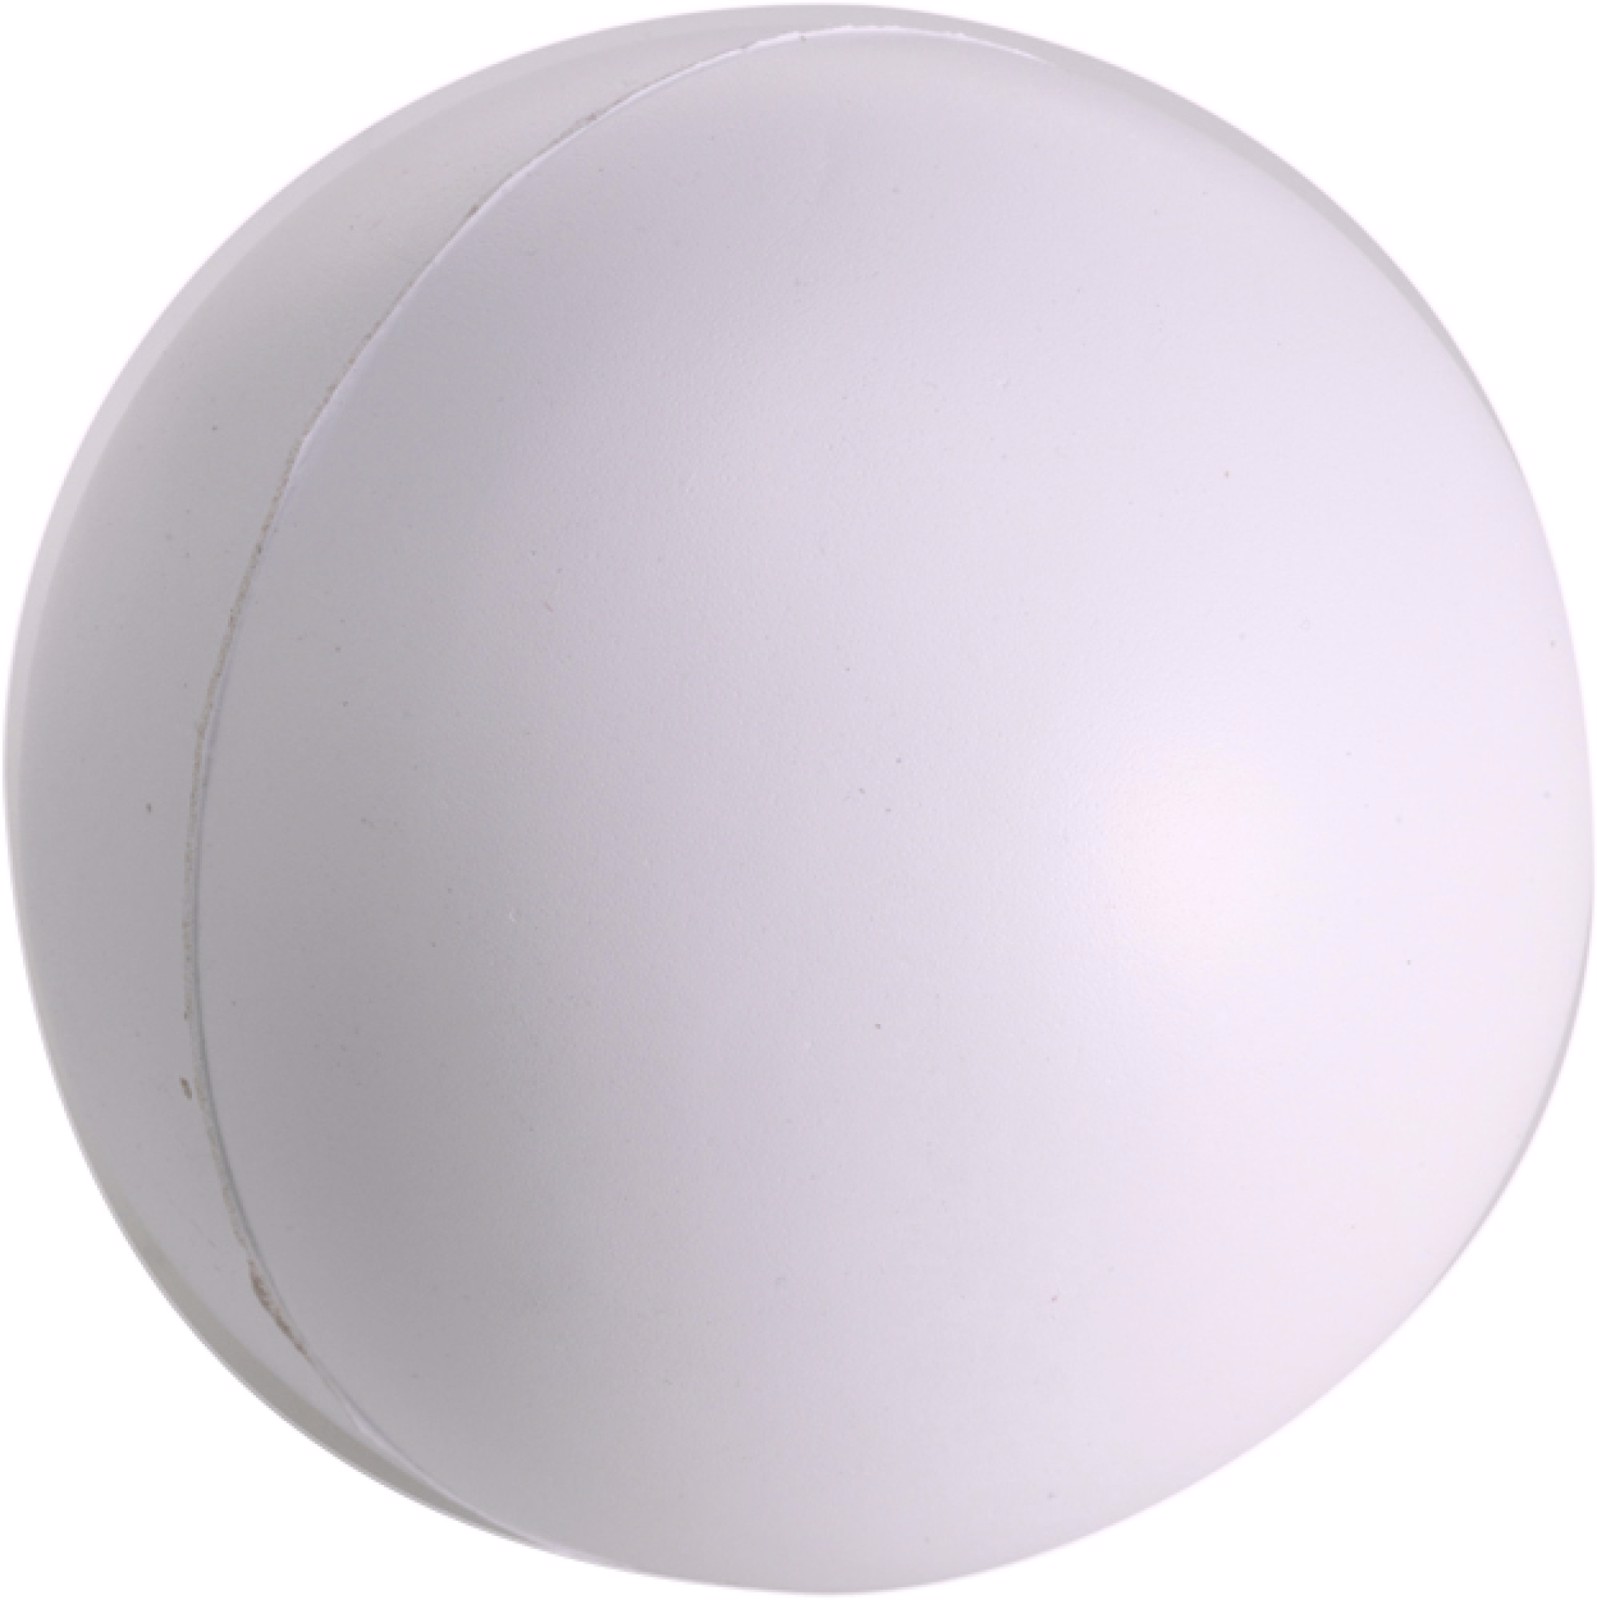 PU foam stress ball - White